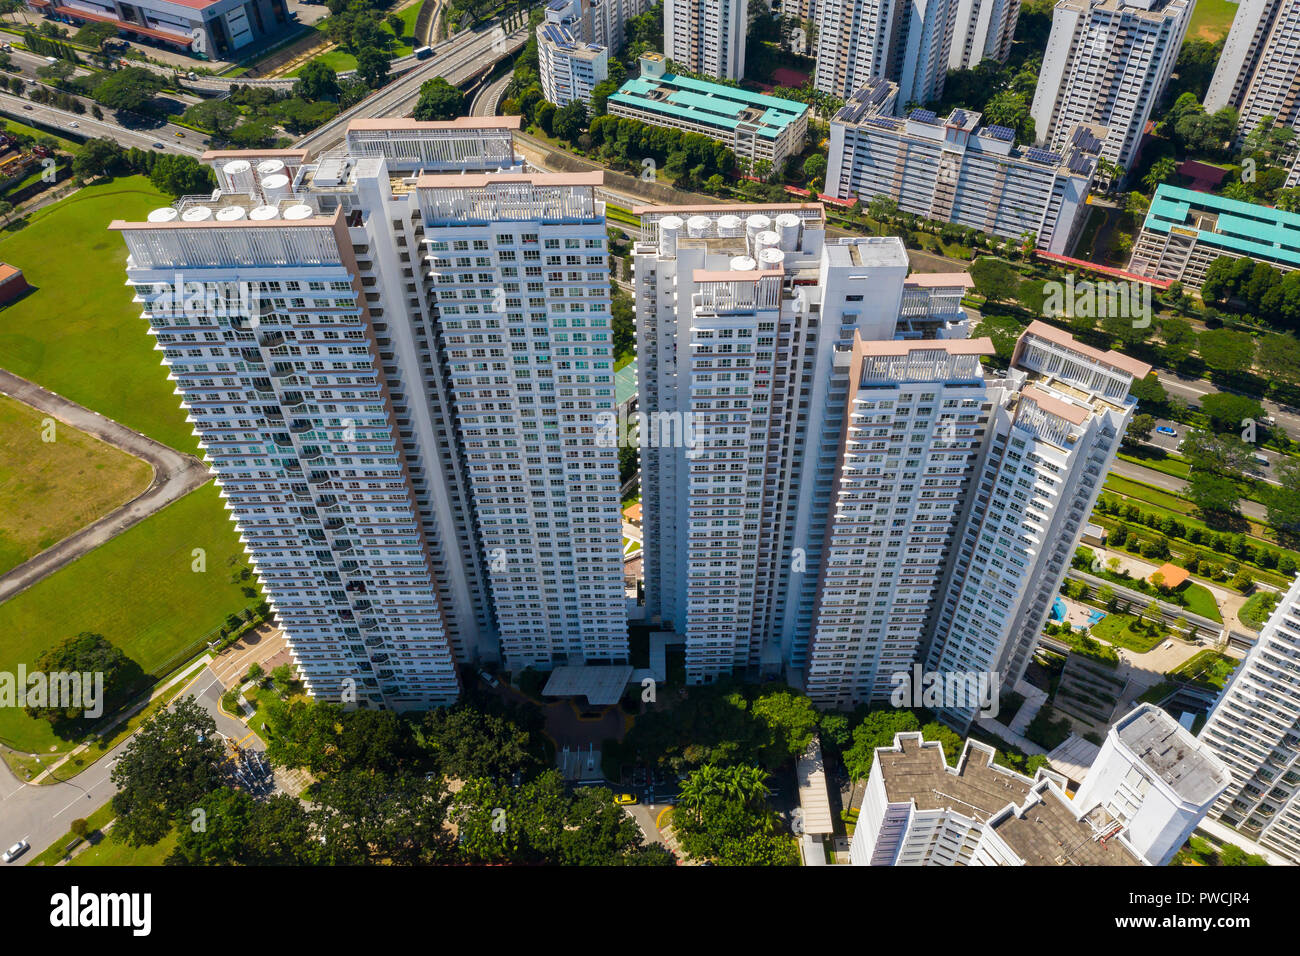 Aerial view of a 40 storey high rise HDB blocks at Bukit Batok, Singapore. Stock Photo